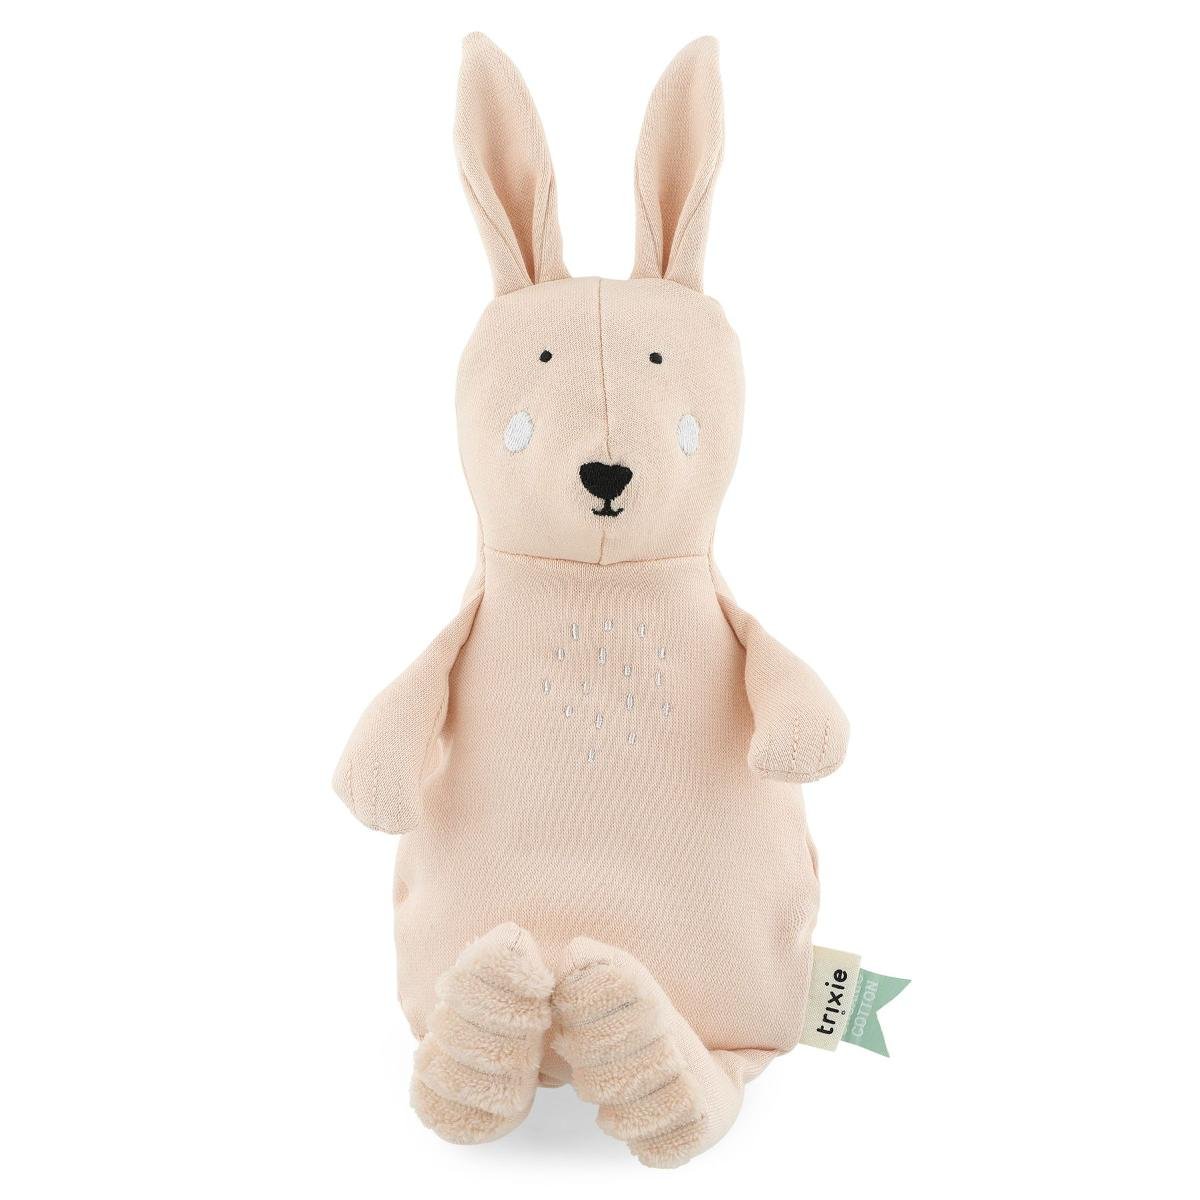 Trixie Baby Trixie Baby - Plush Toy Small  -  Mrs. Rabbit